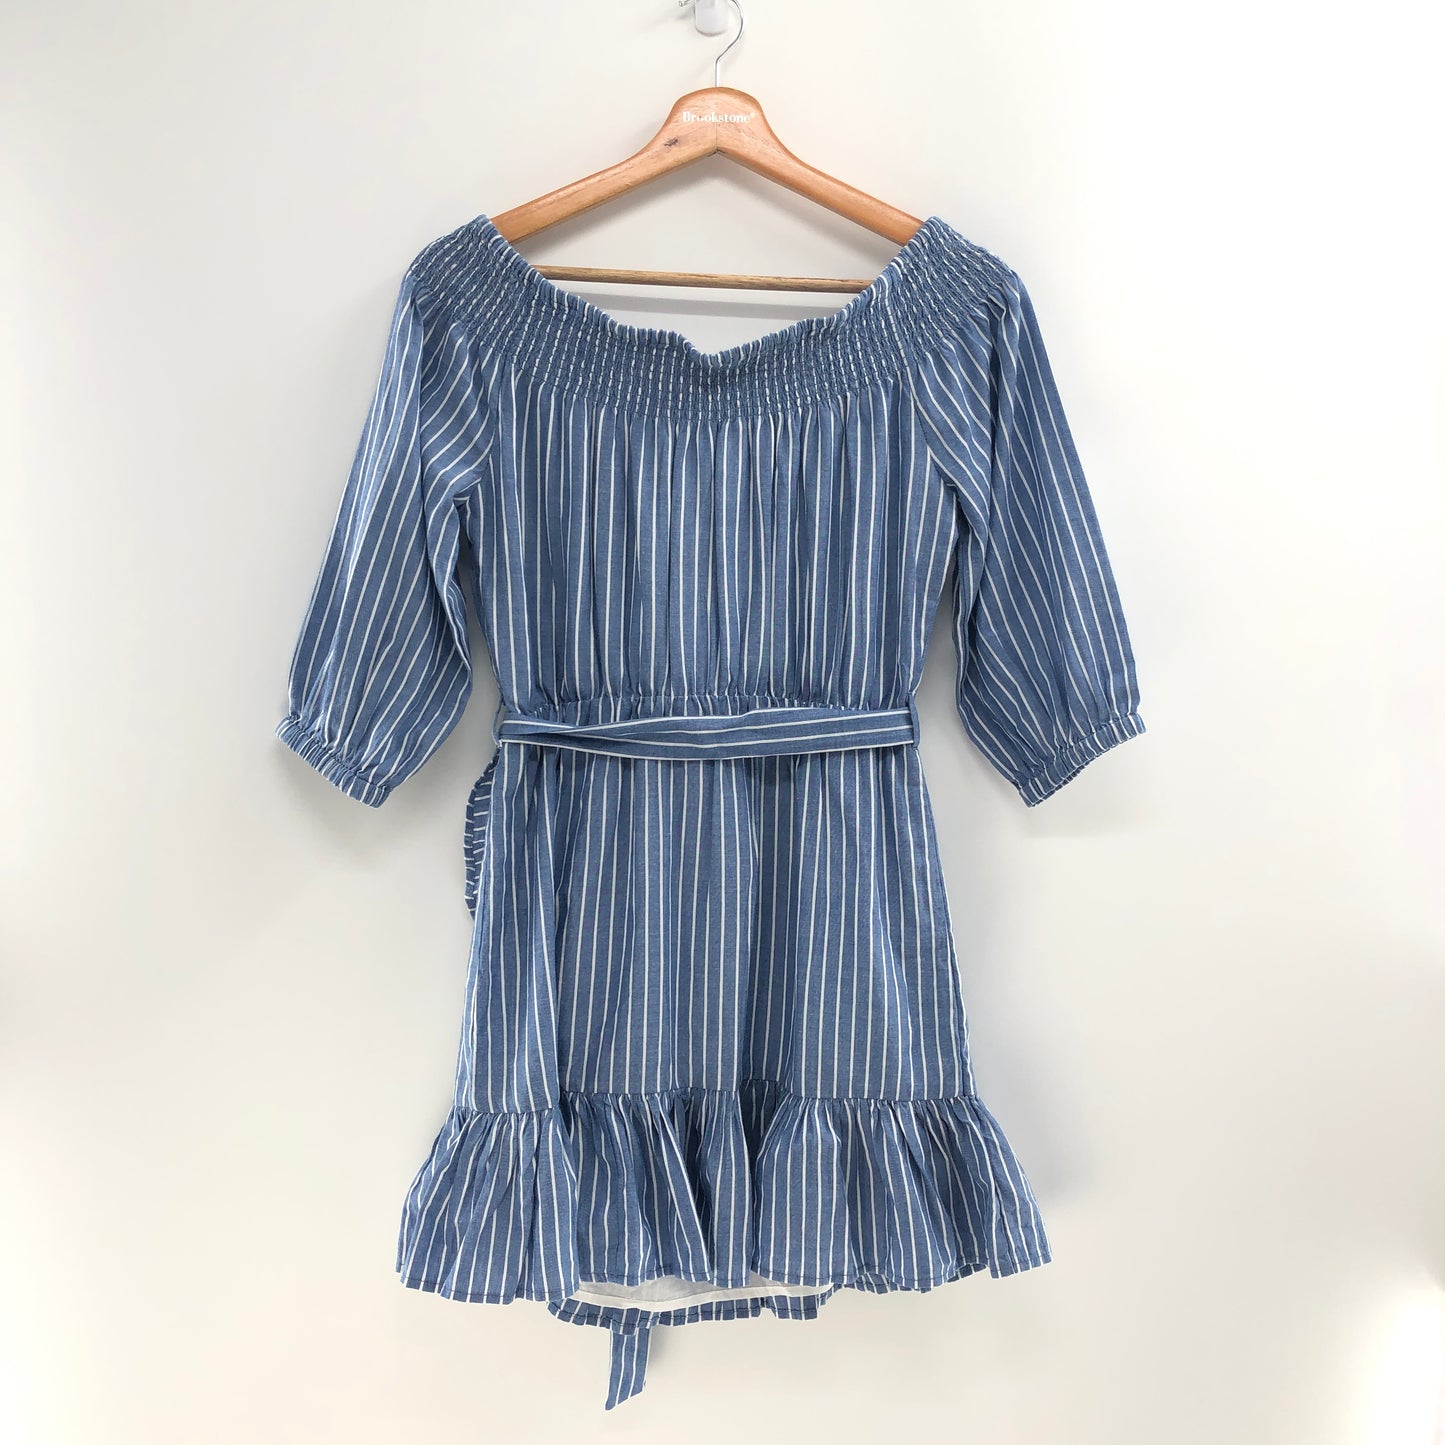 Tularosa Maida Ruffle Dress in Blue & White Stripe S